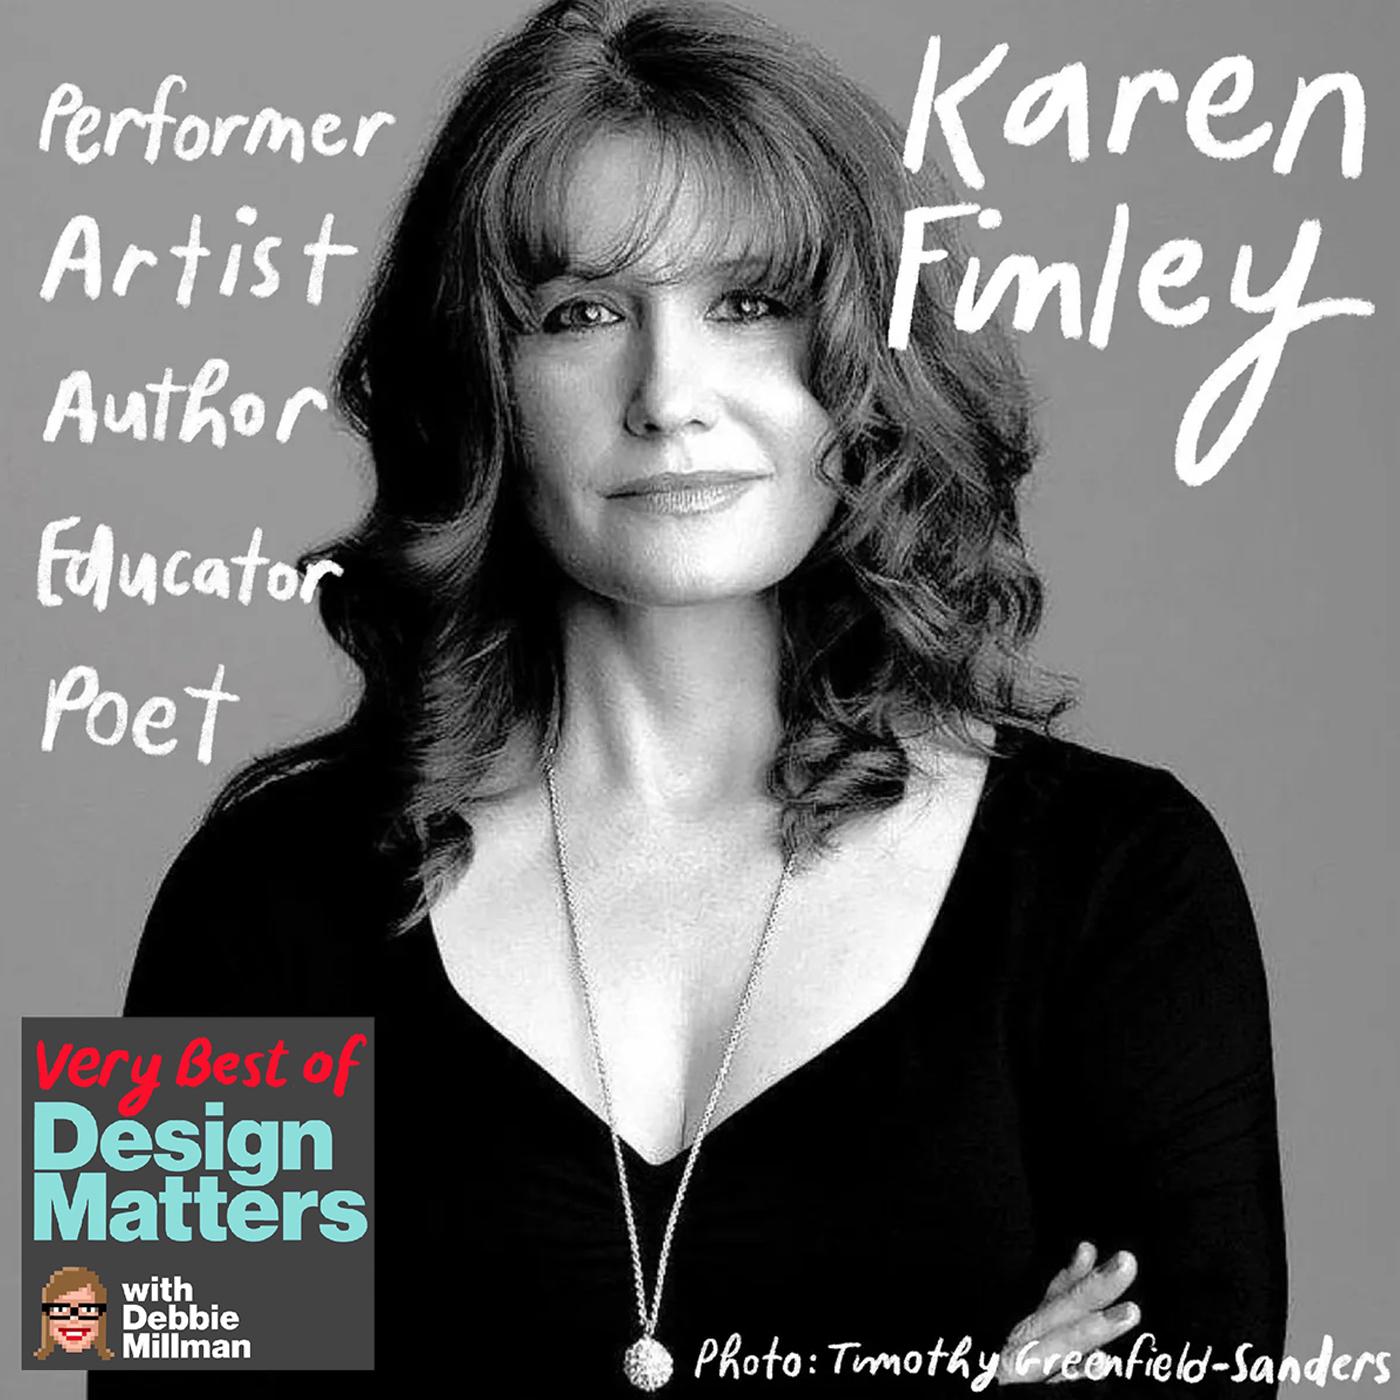 Thumbnail for "Best of Design Matters: Karen Finley".